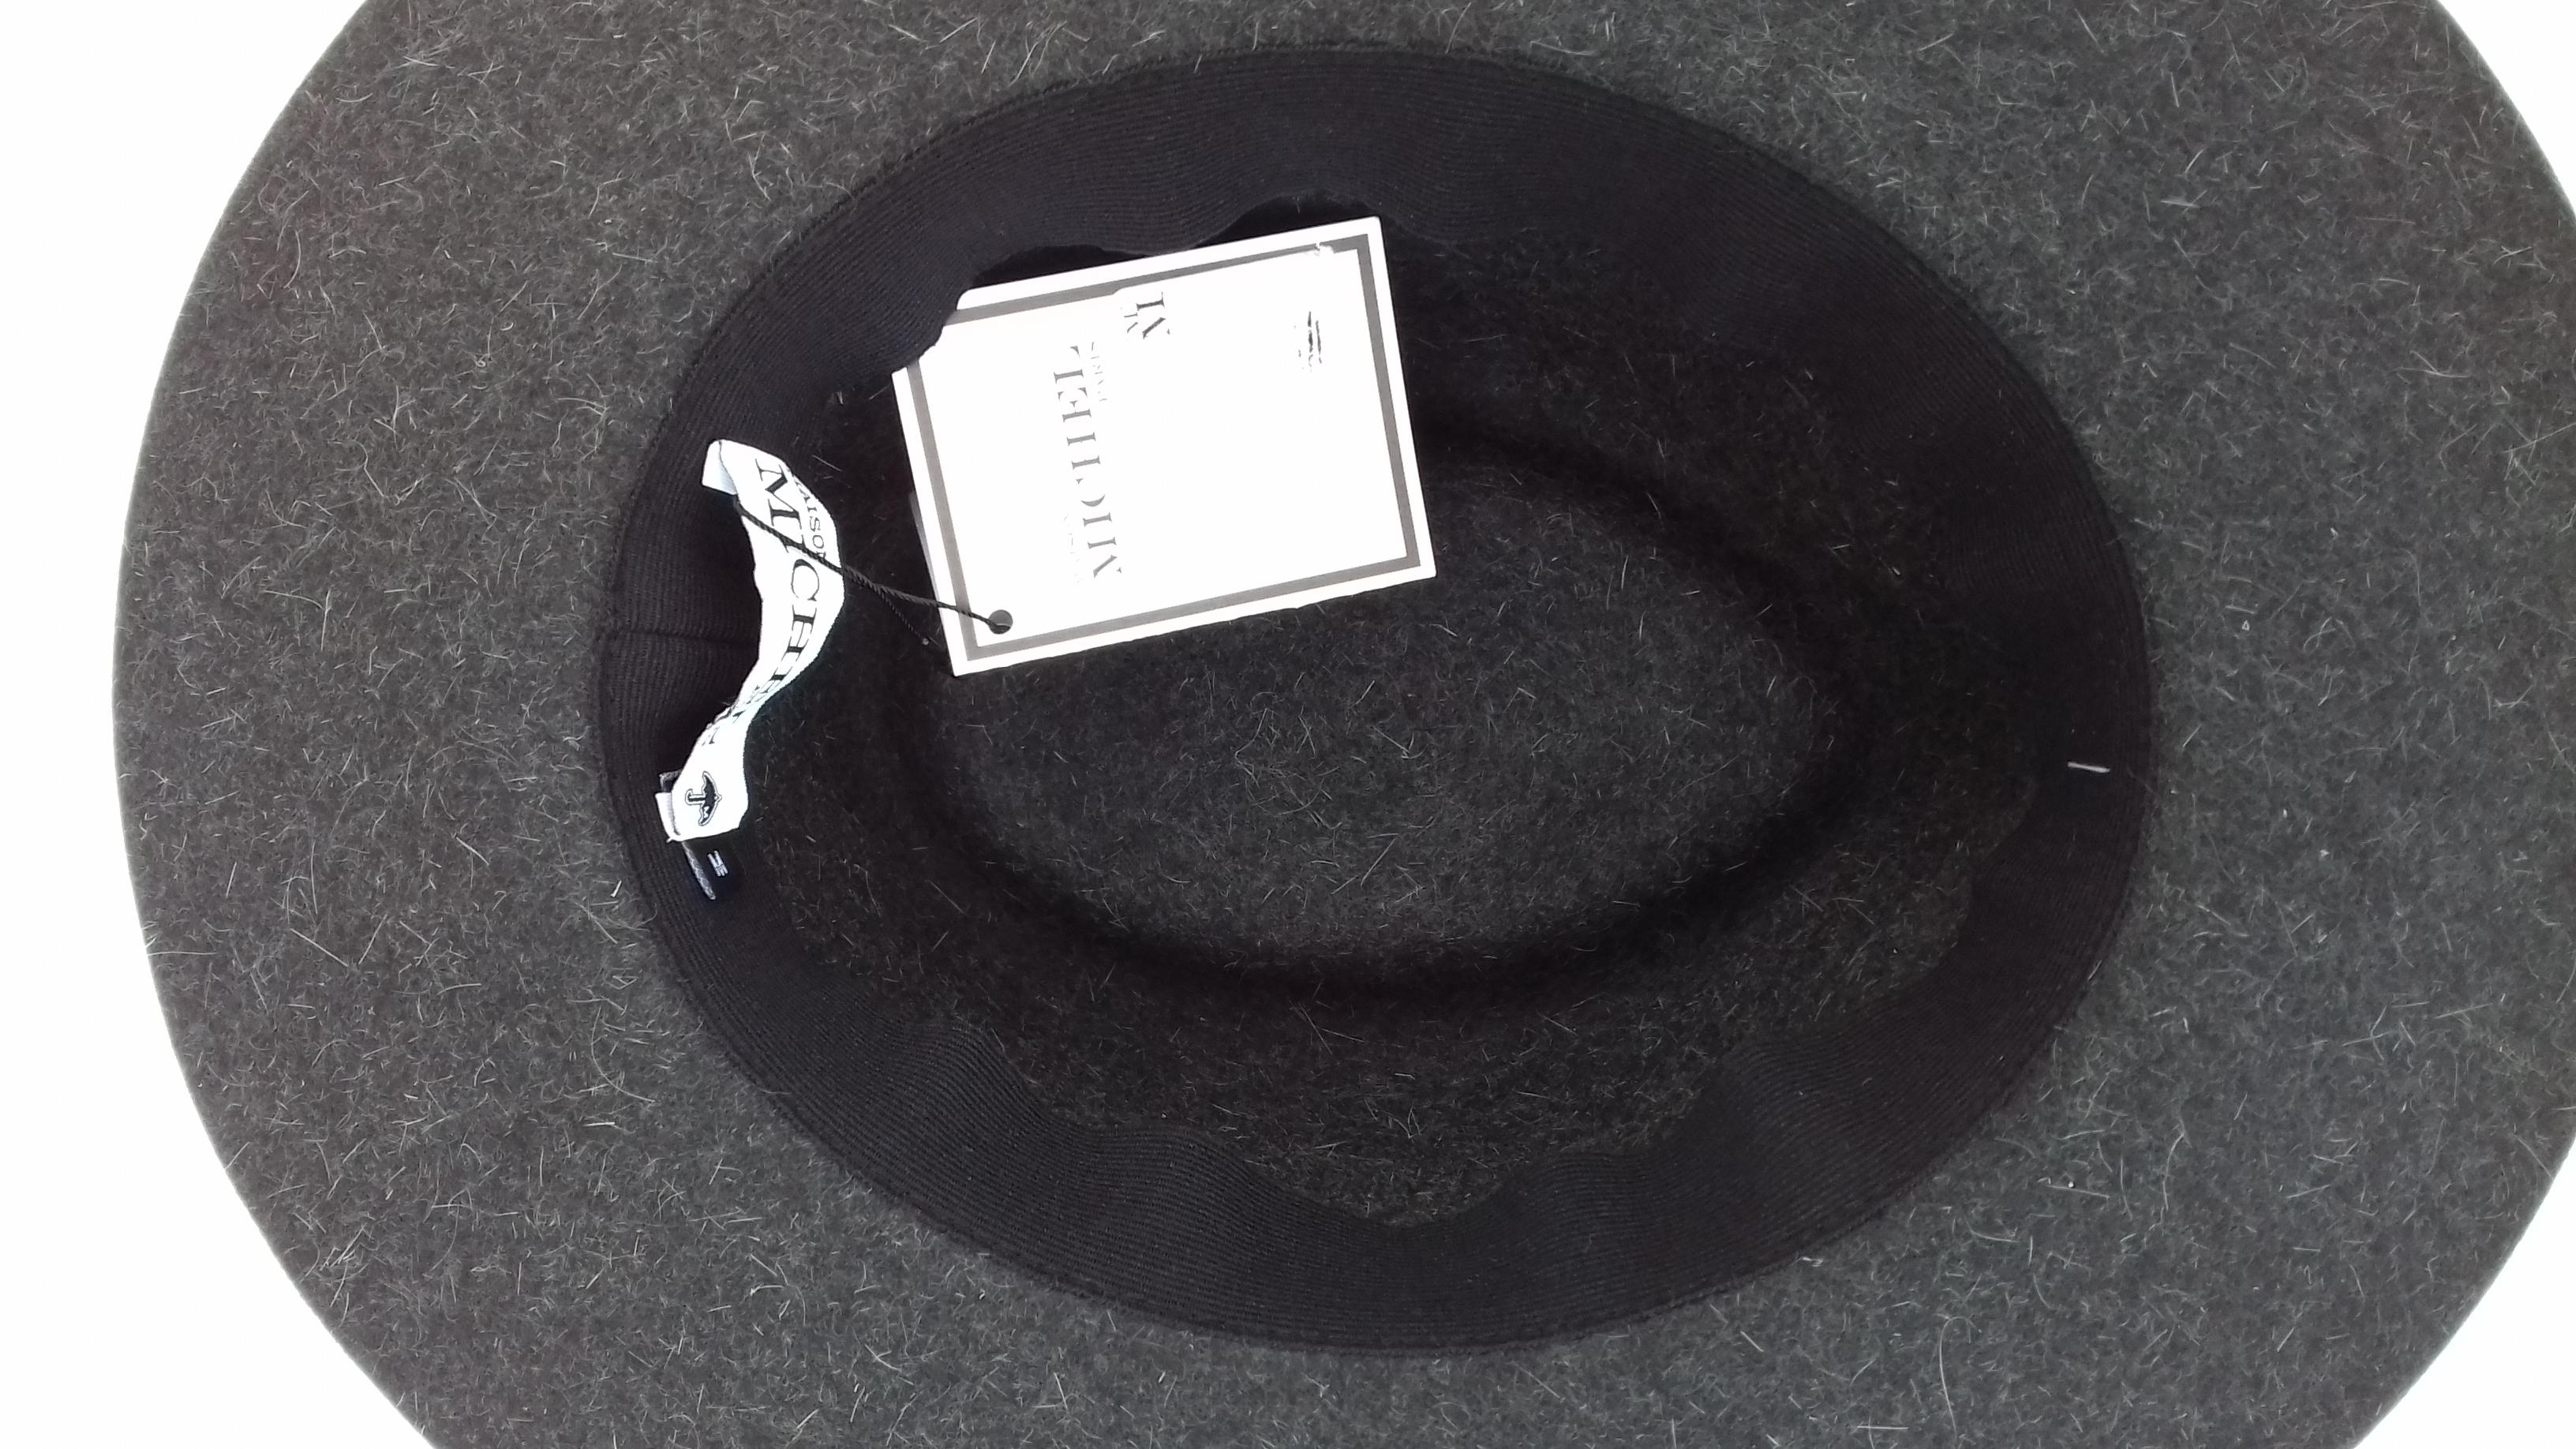 MAISON MICHEL Paris Andre Fedora Felt Hat in Charcoal Grey Size M For Sale 2